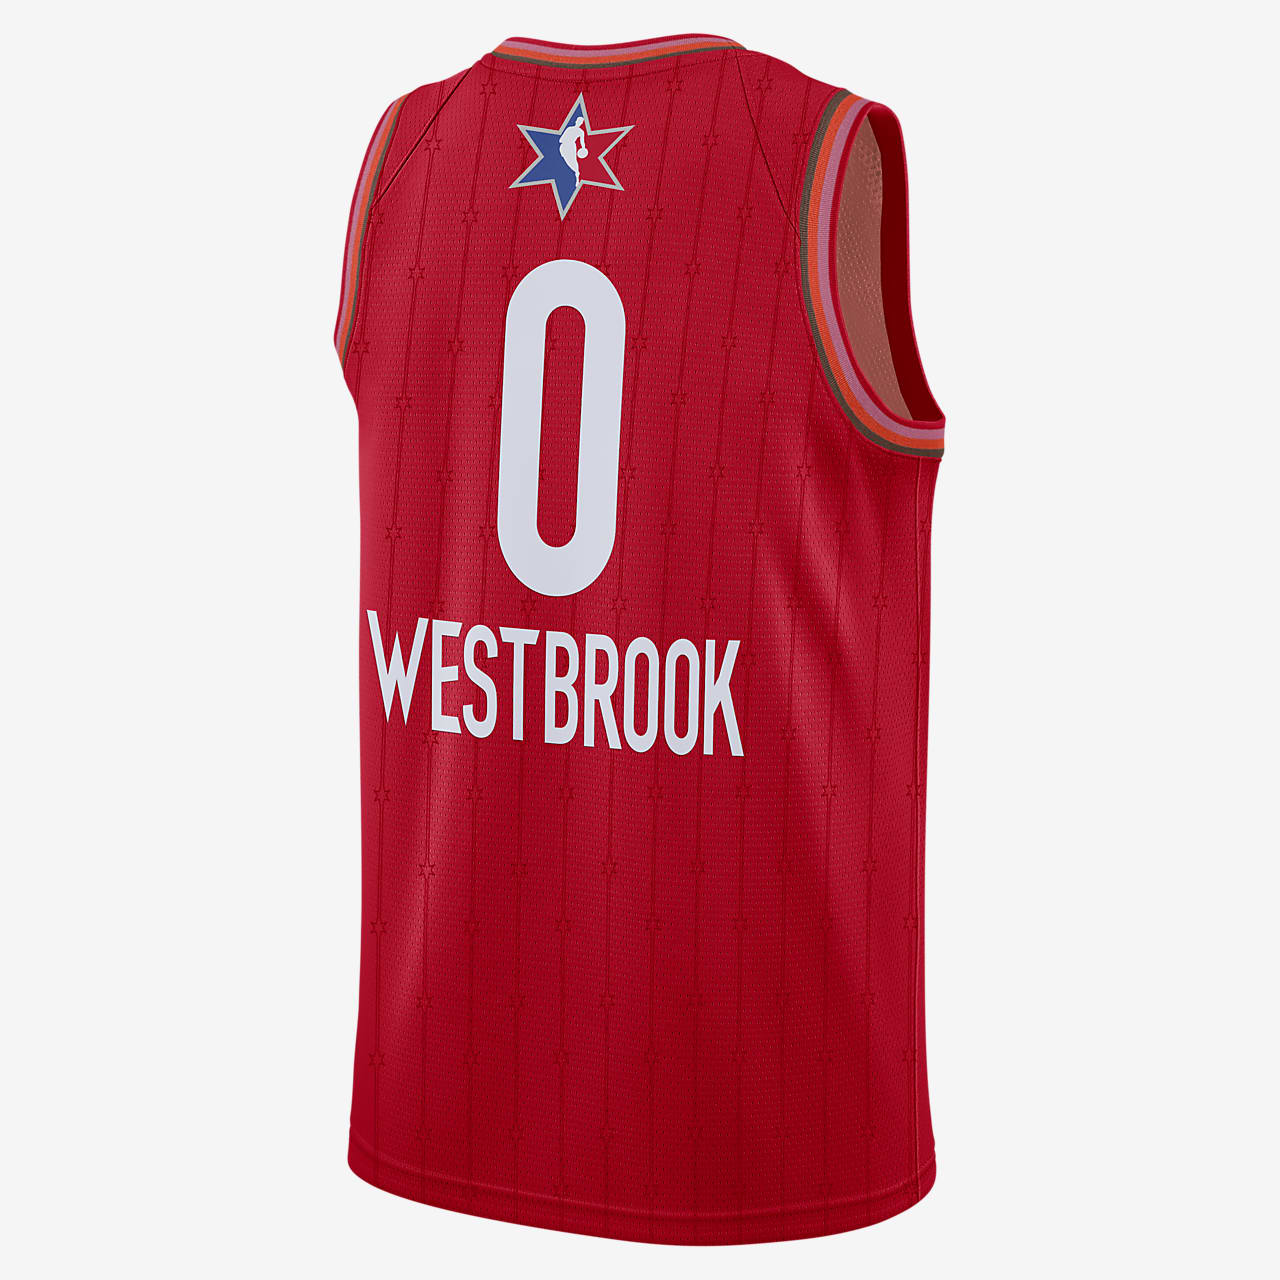 westbrook jordan jersey